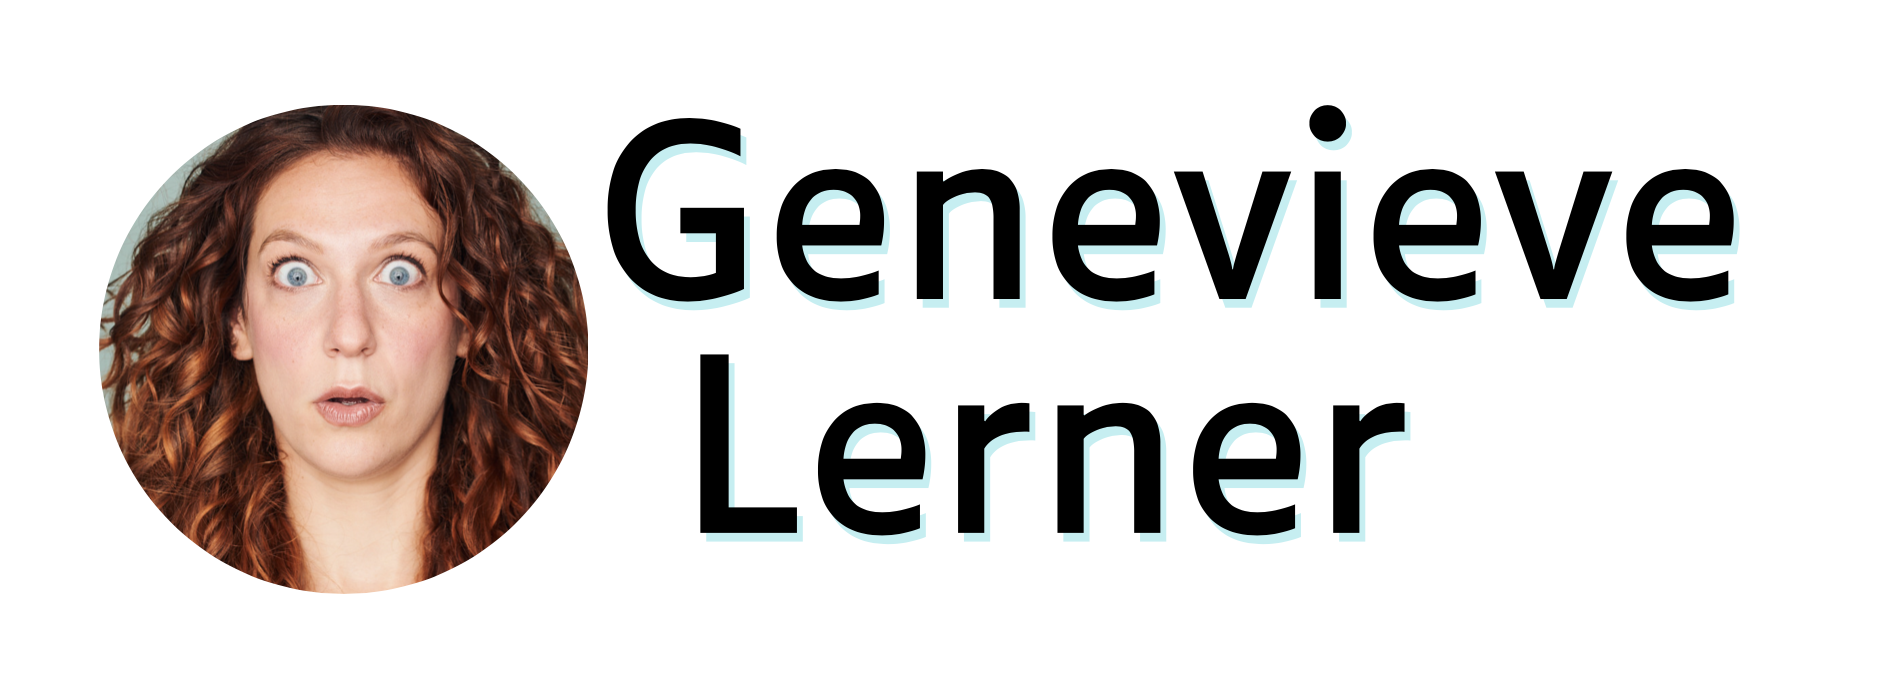 Genevieve Lerner